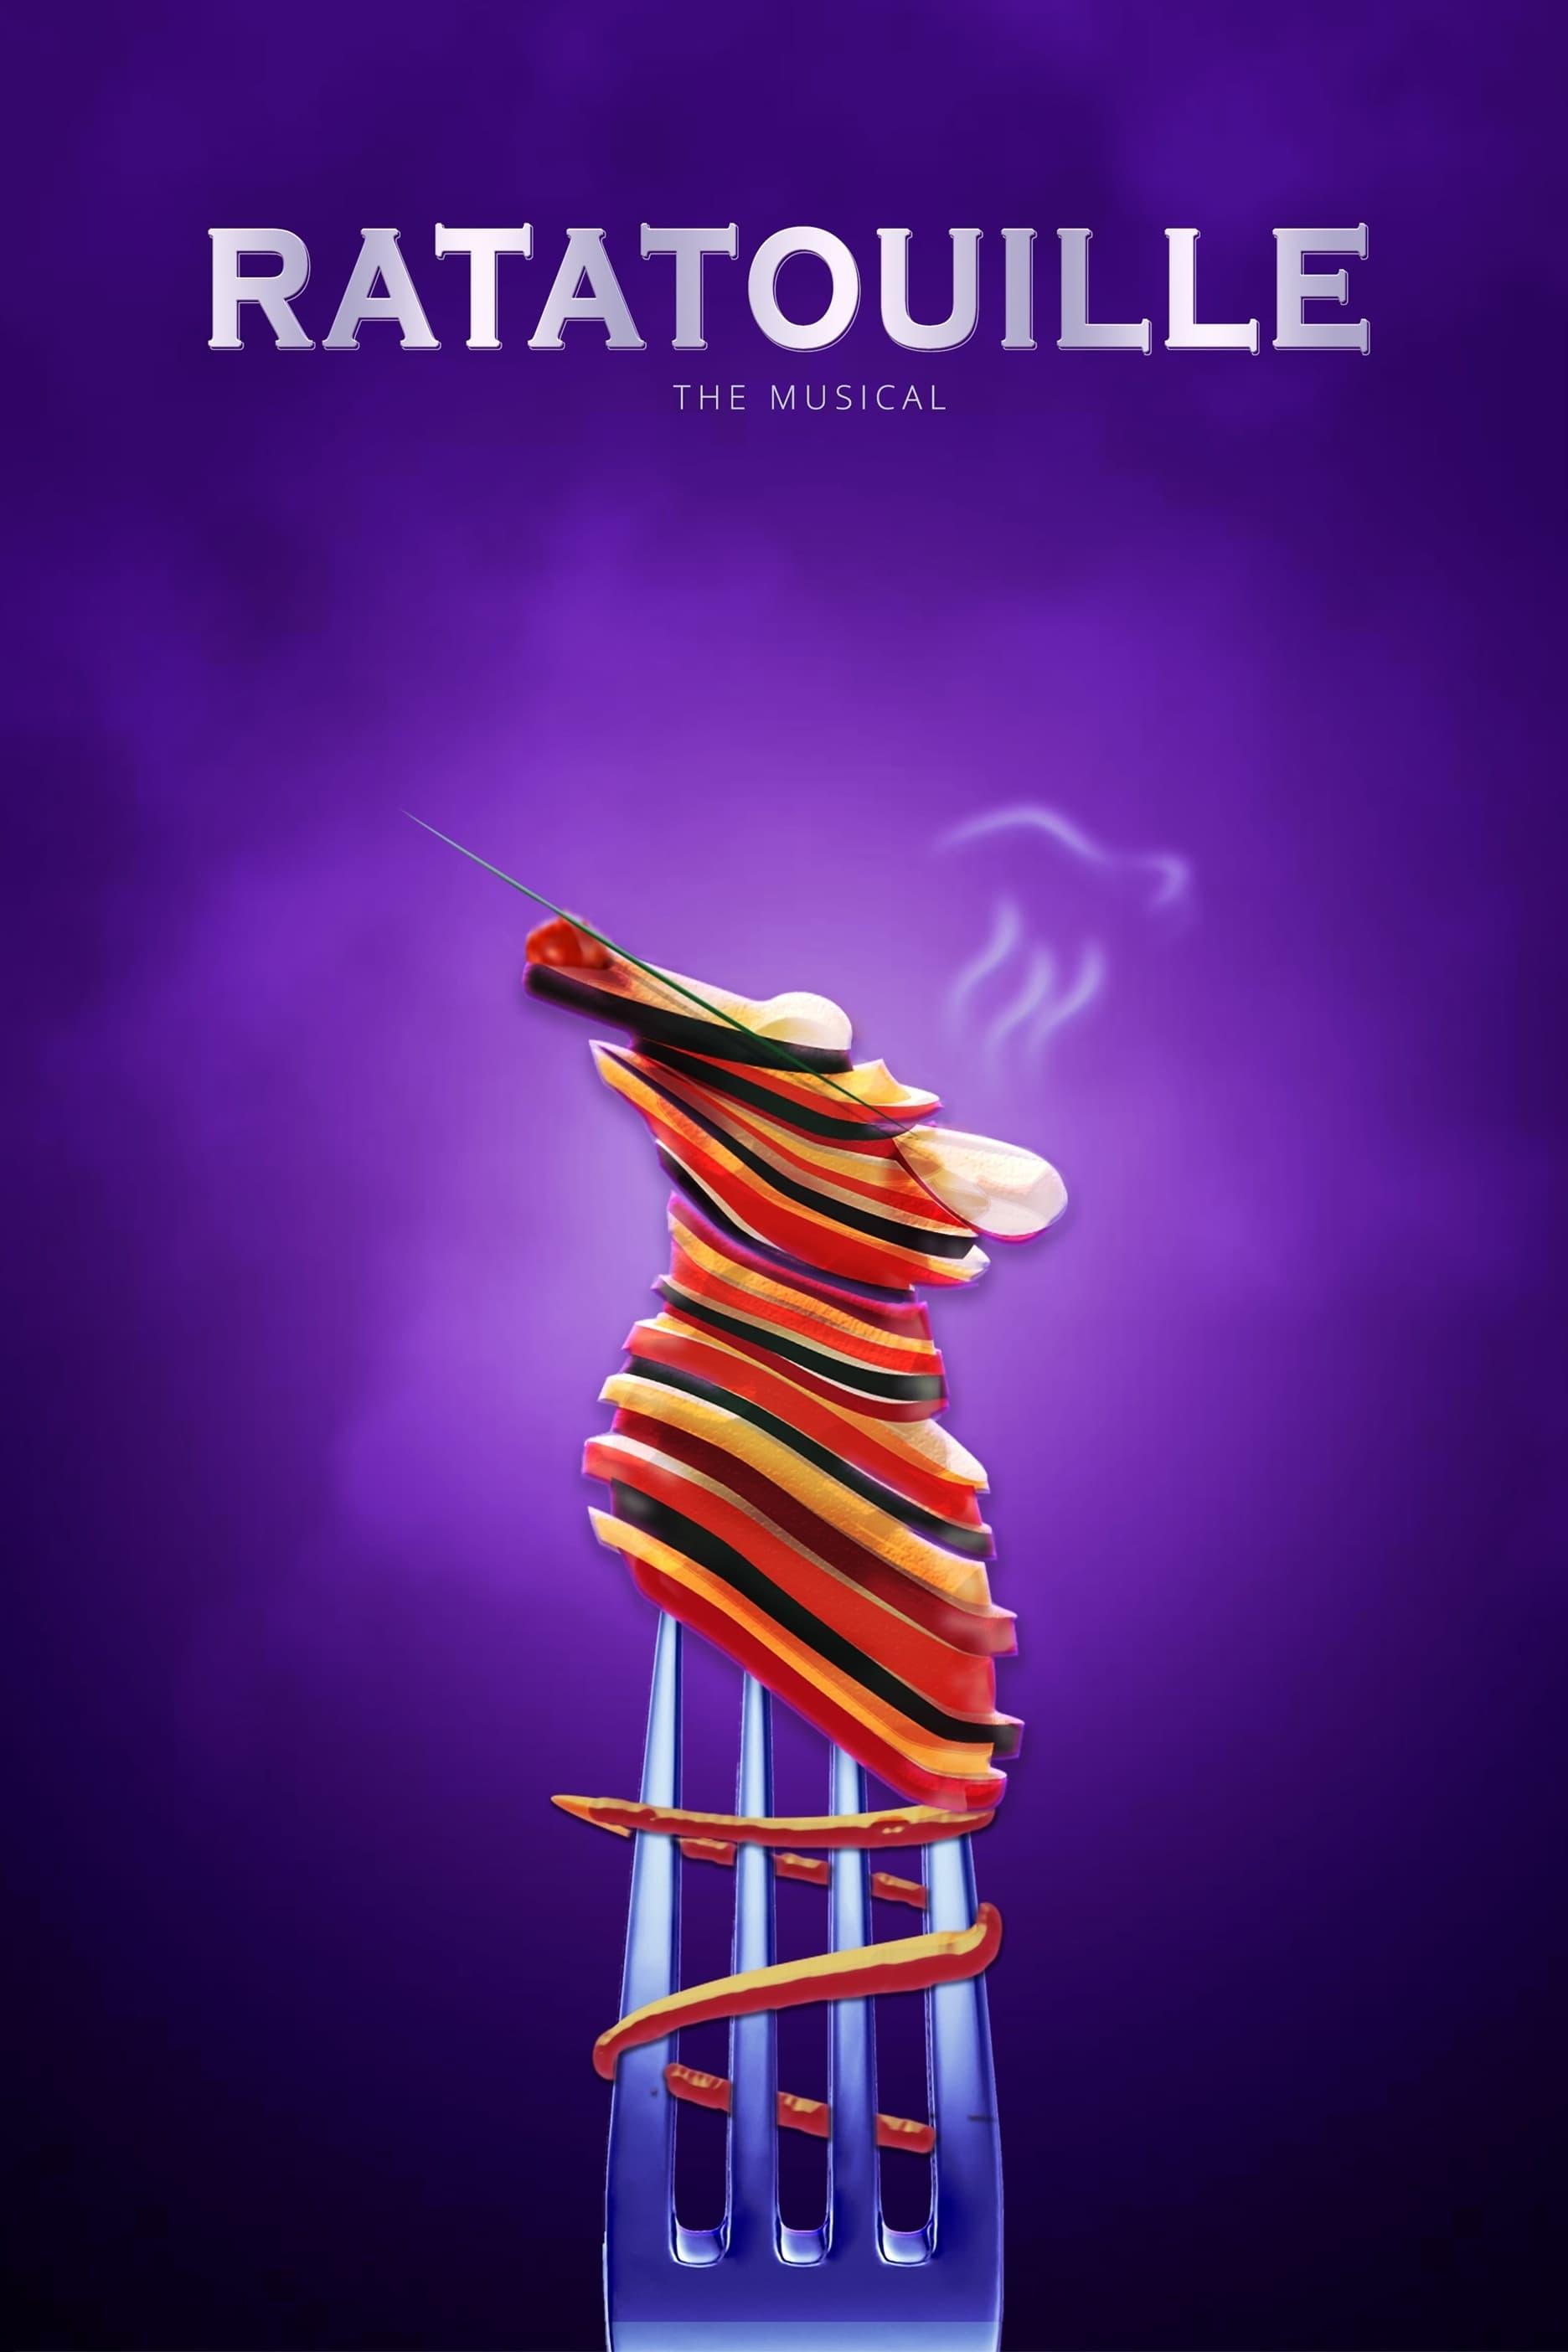 Ratatouille: The TikTok Musical poster